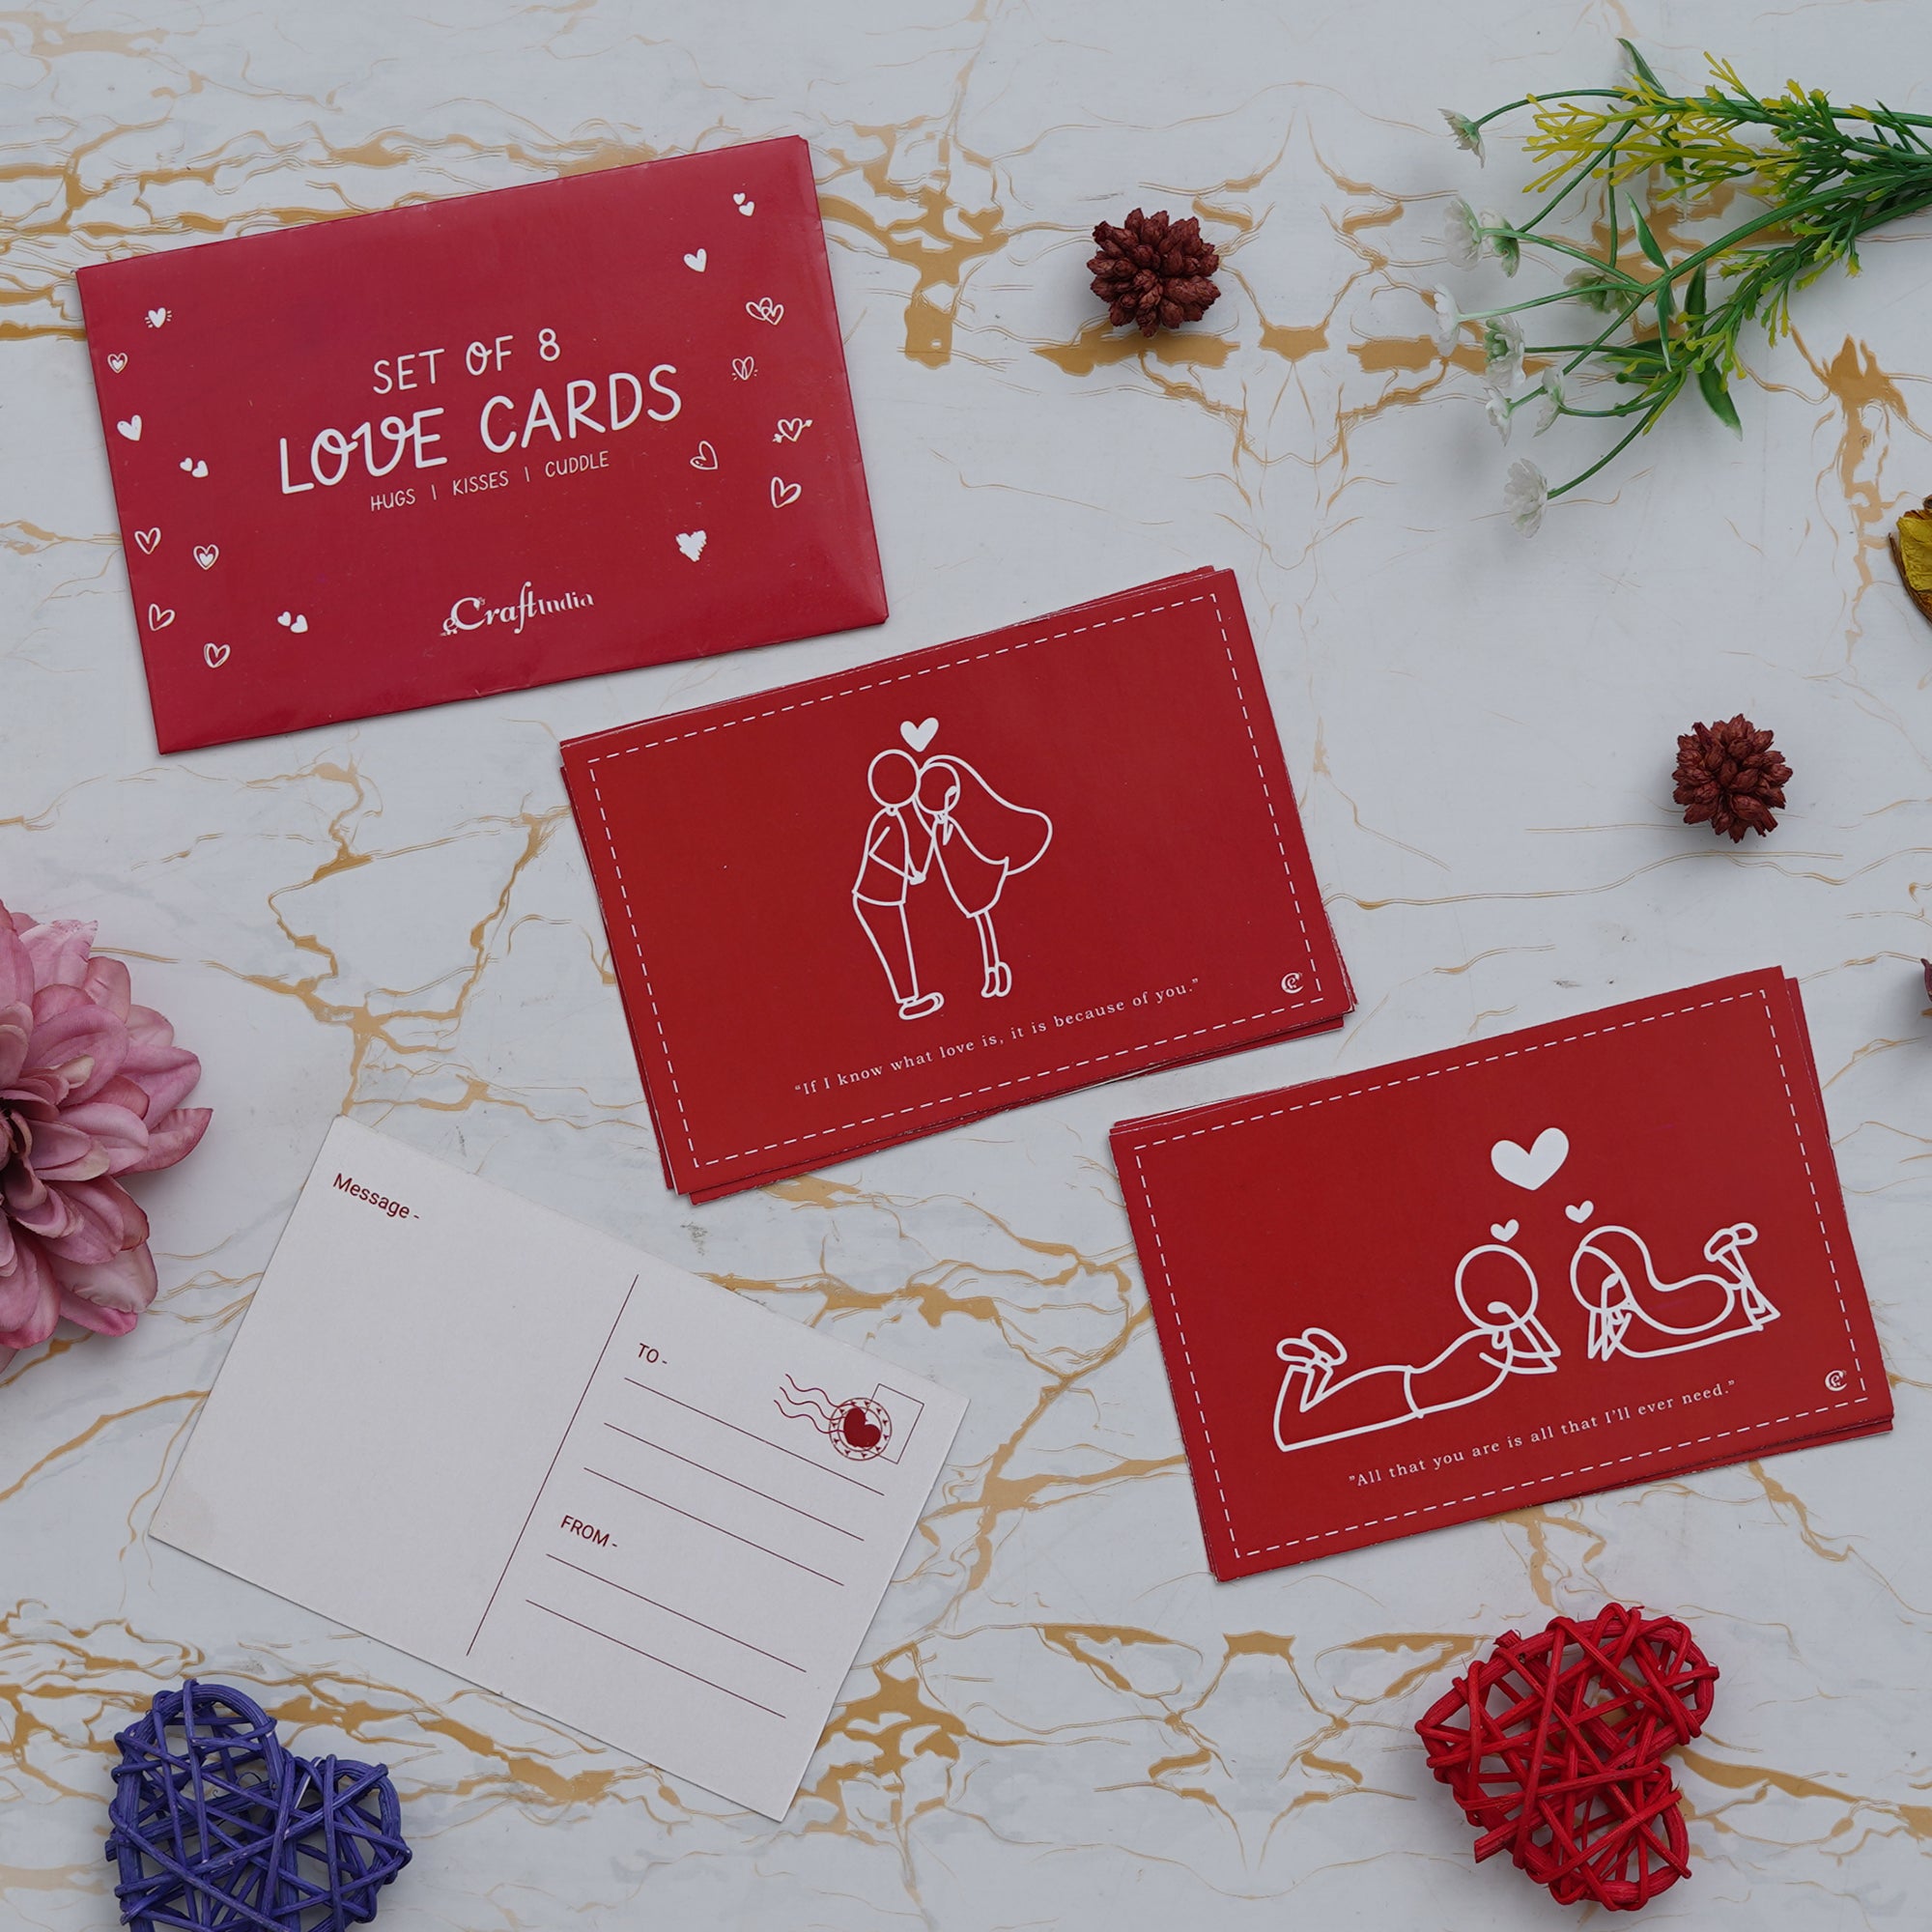 Valentine Combo of Pack of 8 Love Gift Cards, Golden Rose Gift Set, Red Message Bottle Wooden Box Set 1